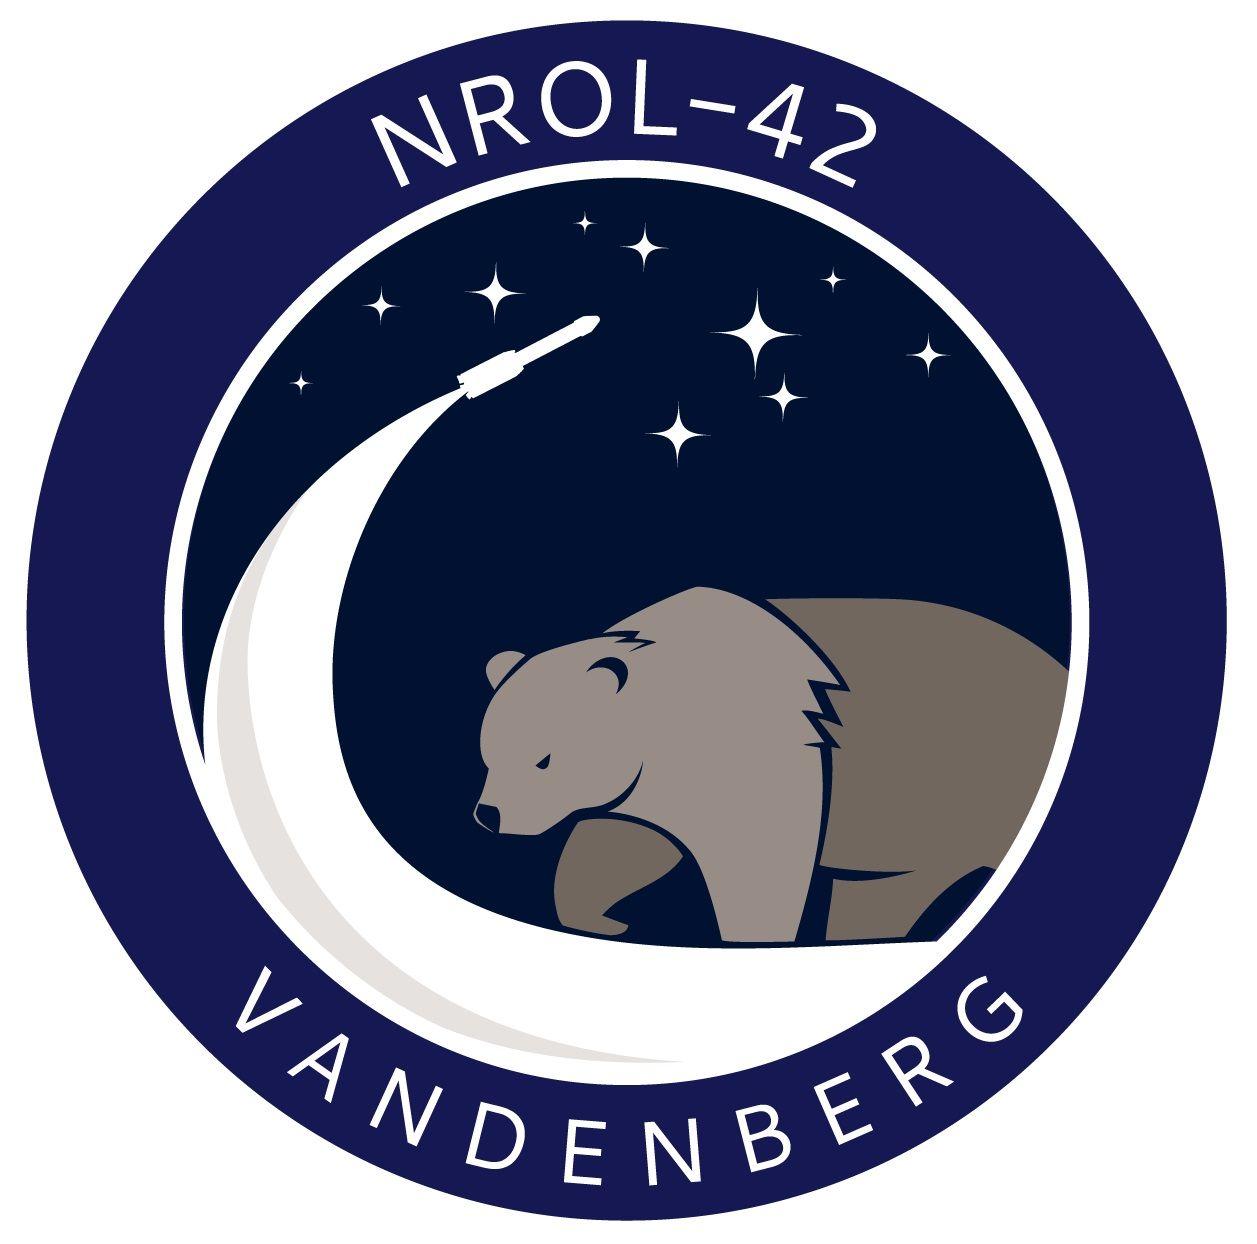 Nrol Logo - NROL-42 Satellite – NROL-42 | Spaceflight101